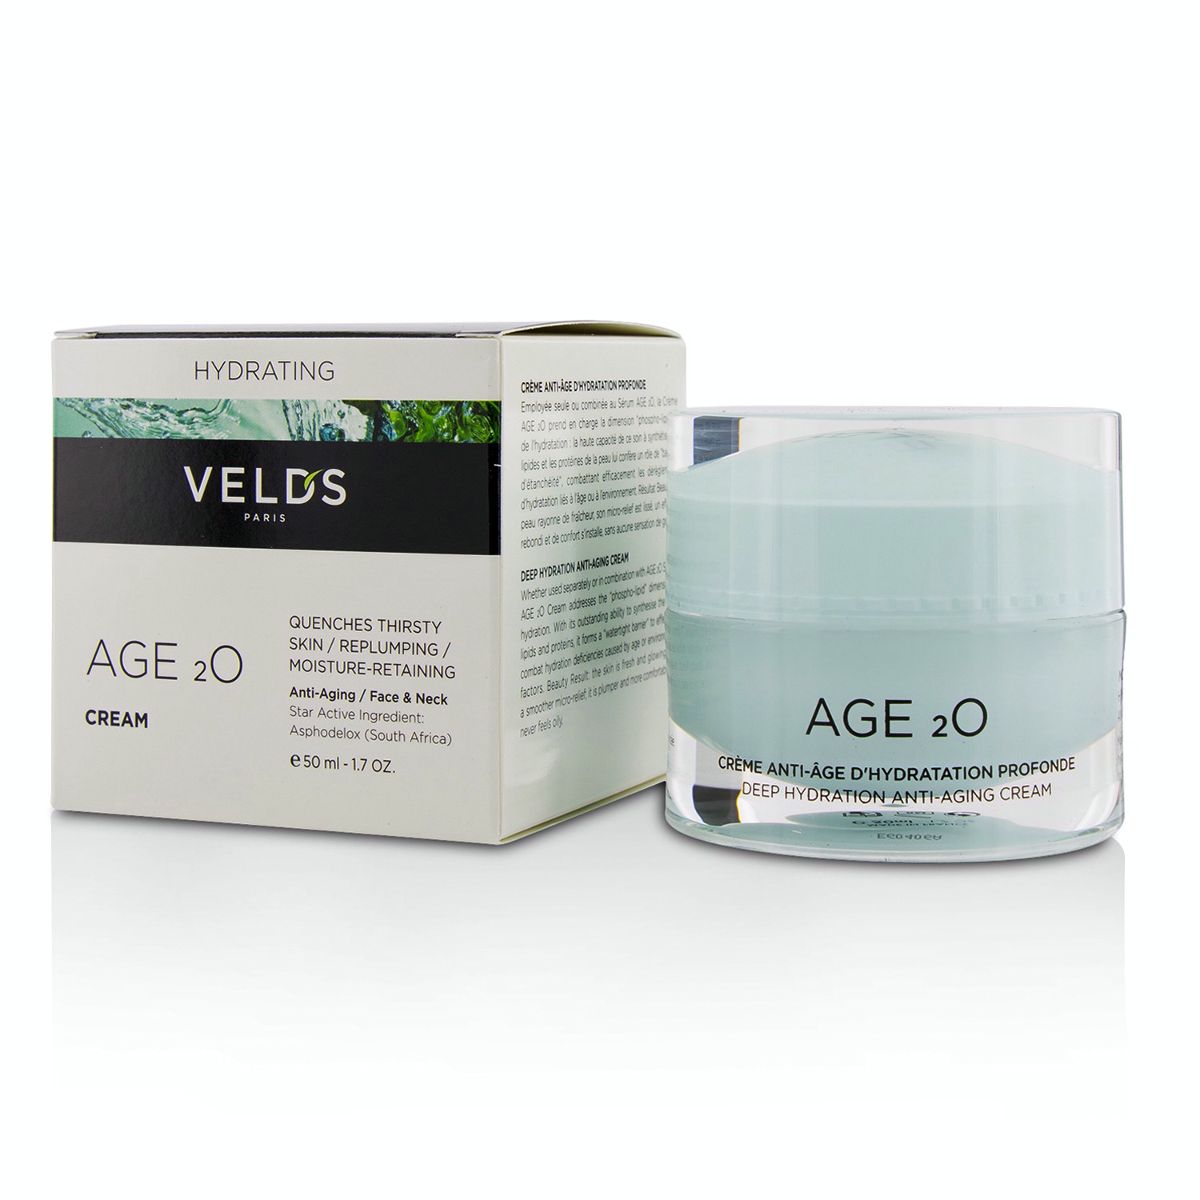 AGE 2O Deep Hydration Anti-Aging Cream Velds Image